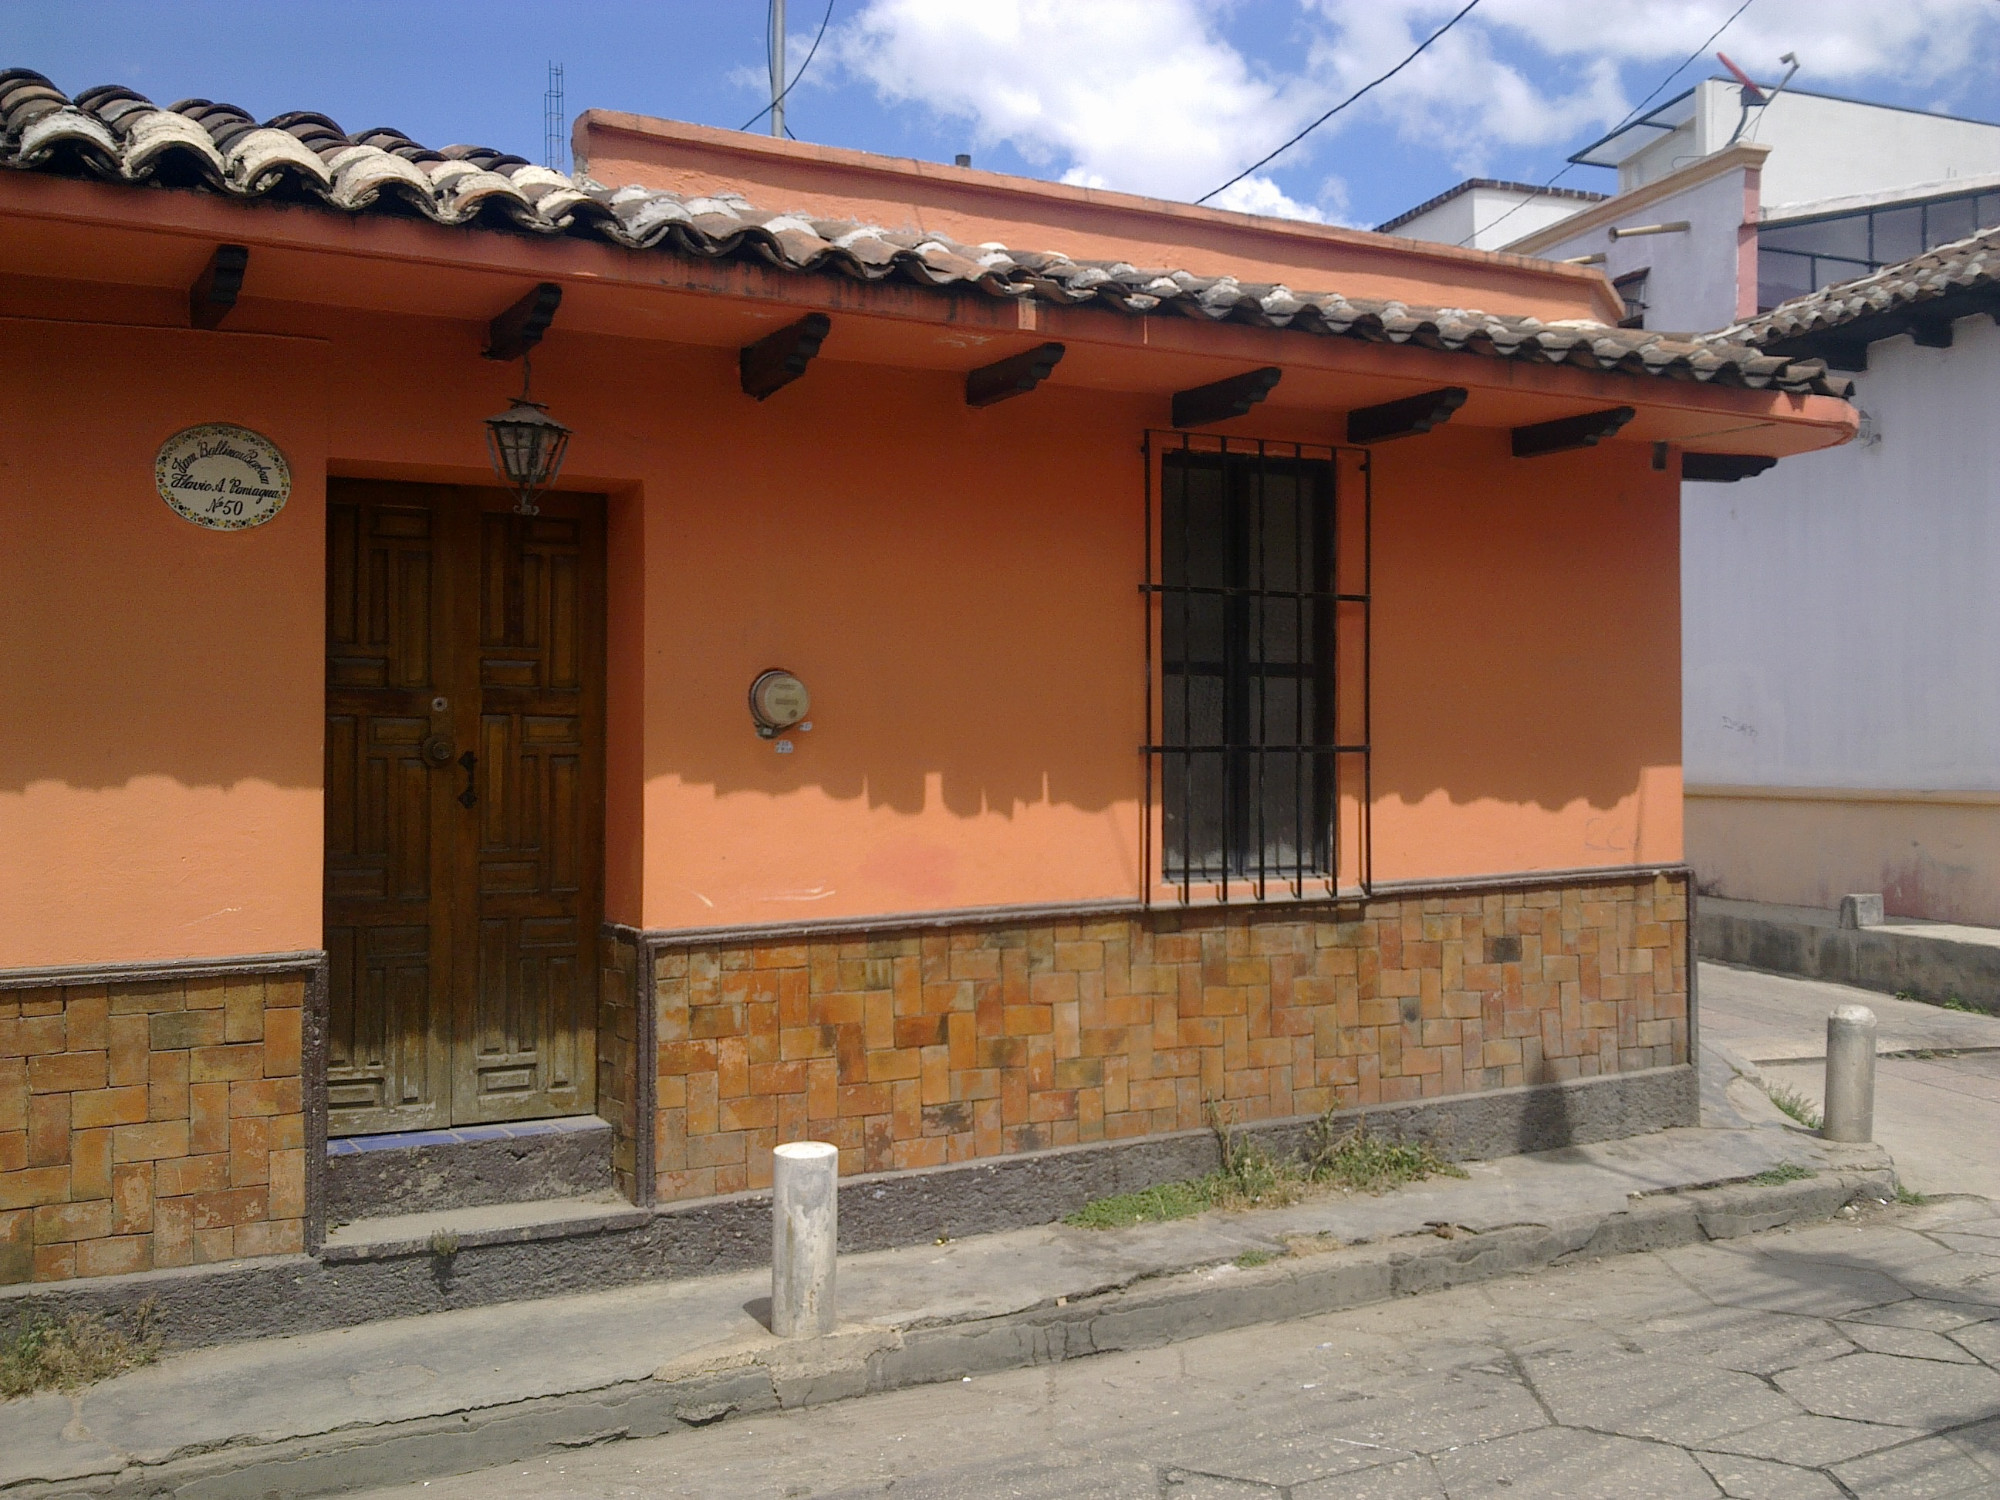 San Cristobal de las Casas (Chiapas, Mexico)